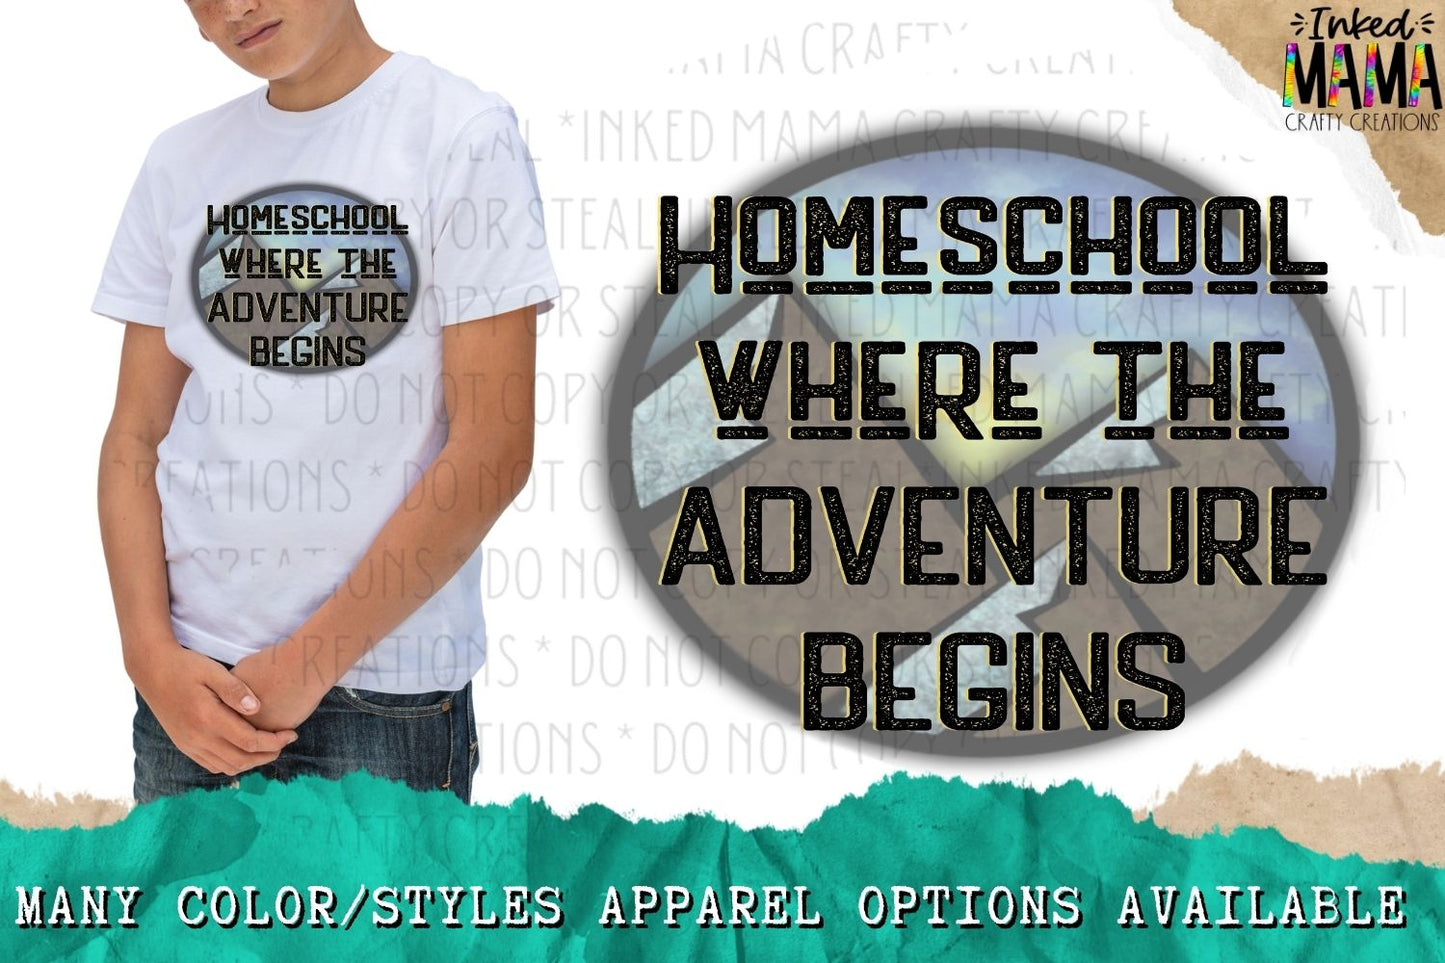 Homeschool where the adventure begins - Apparel